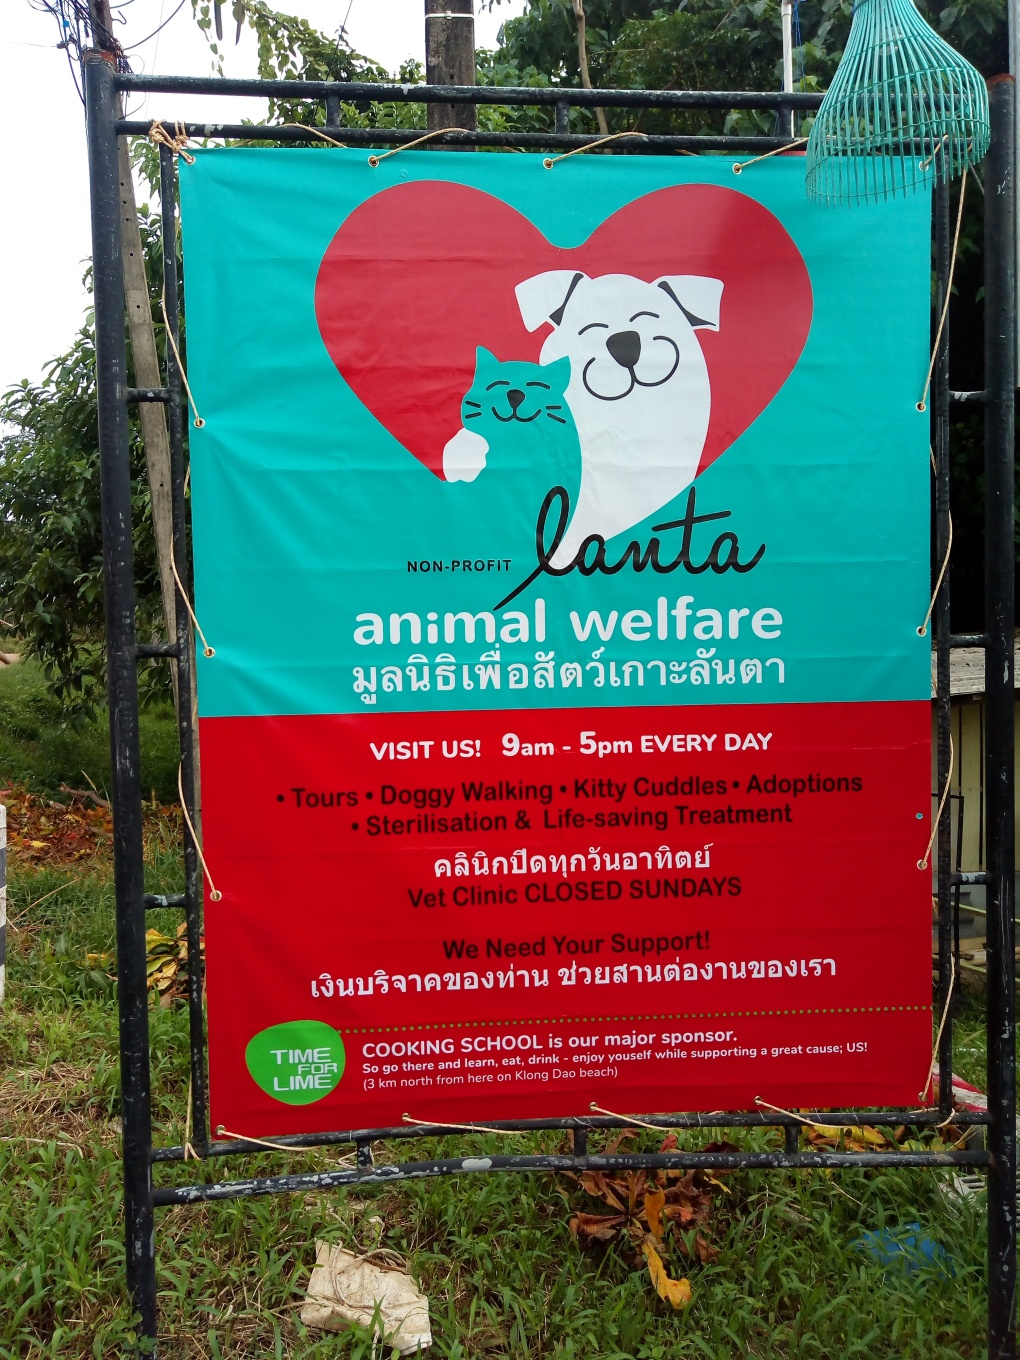 Lanta Animal Welfare, île de Koh Lanta - Thaïlande - Le Monde des Mirons